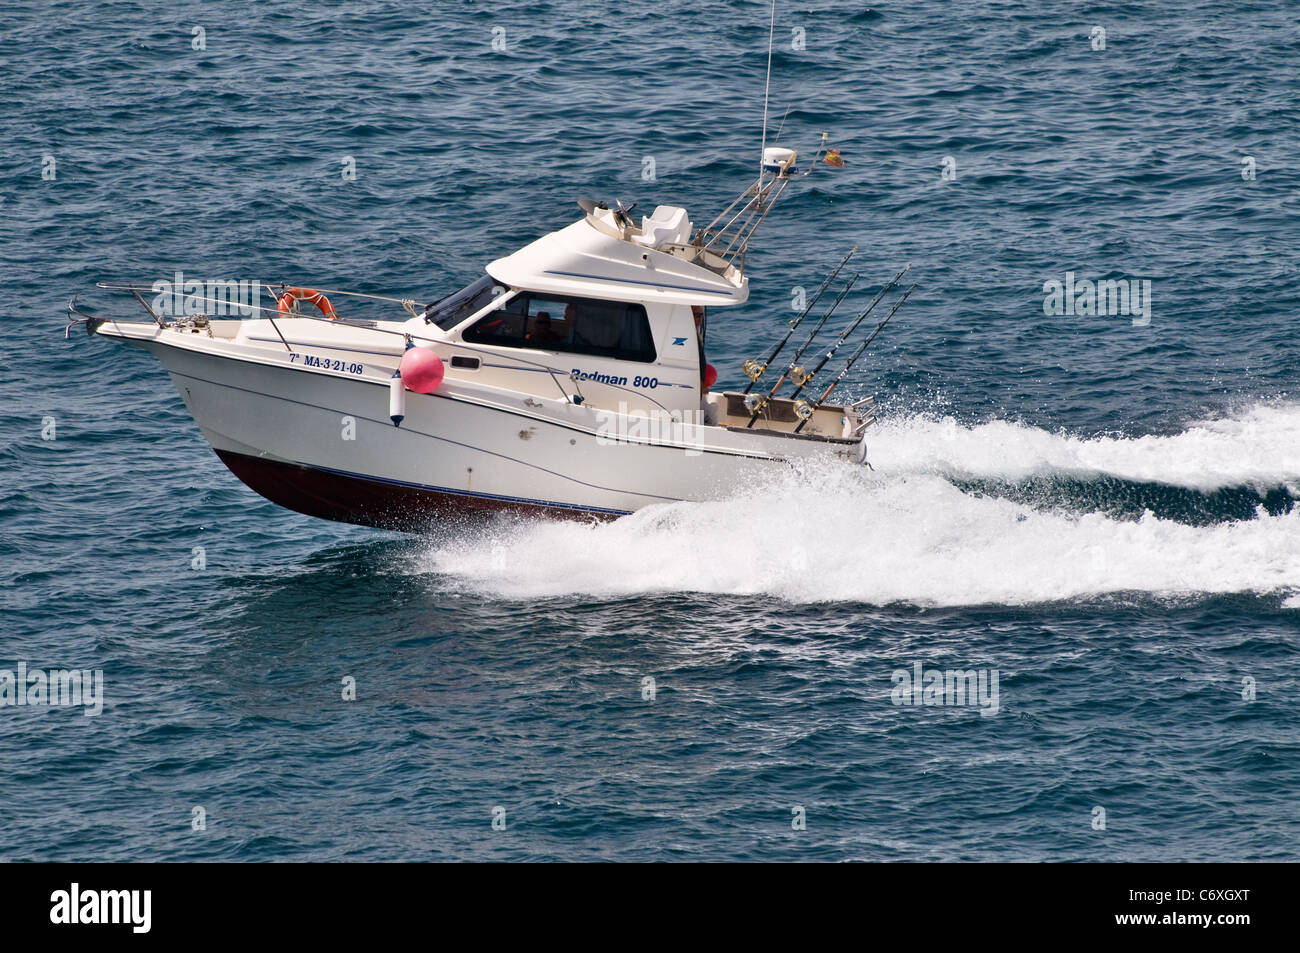 Small fast fishing boat, pleasure craft, Rodman 800 Stock Photo - Alamy